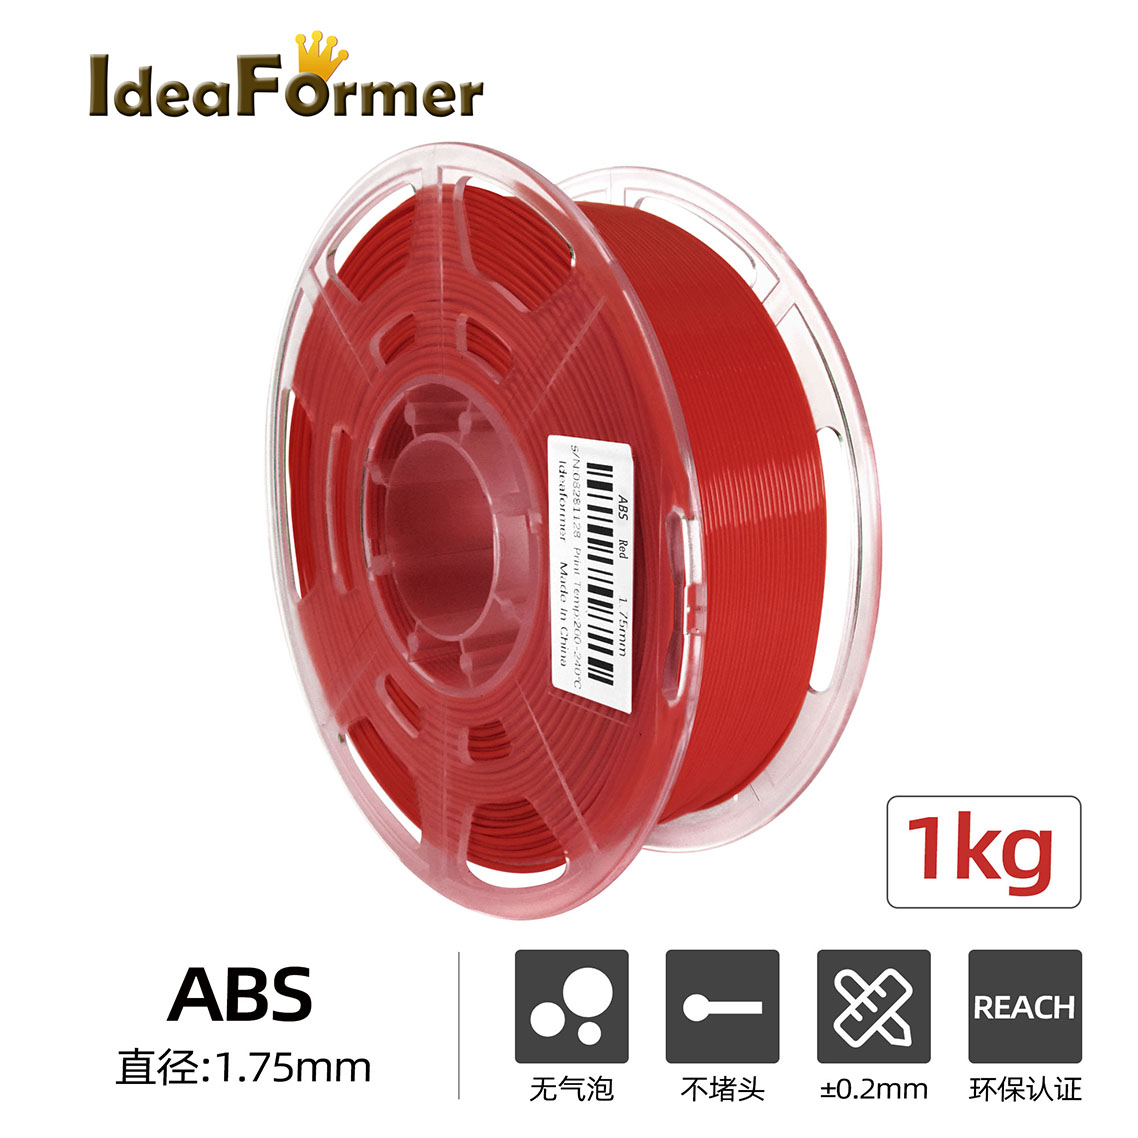 Ideaformer ABS耗材高纯度高韧性1KG线材FDM 1.75MM 3D打印机耗材